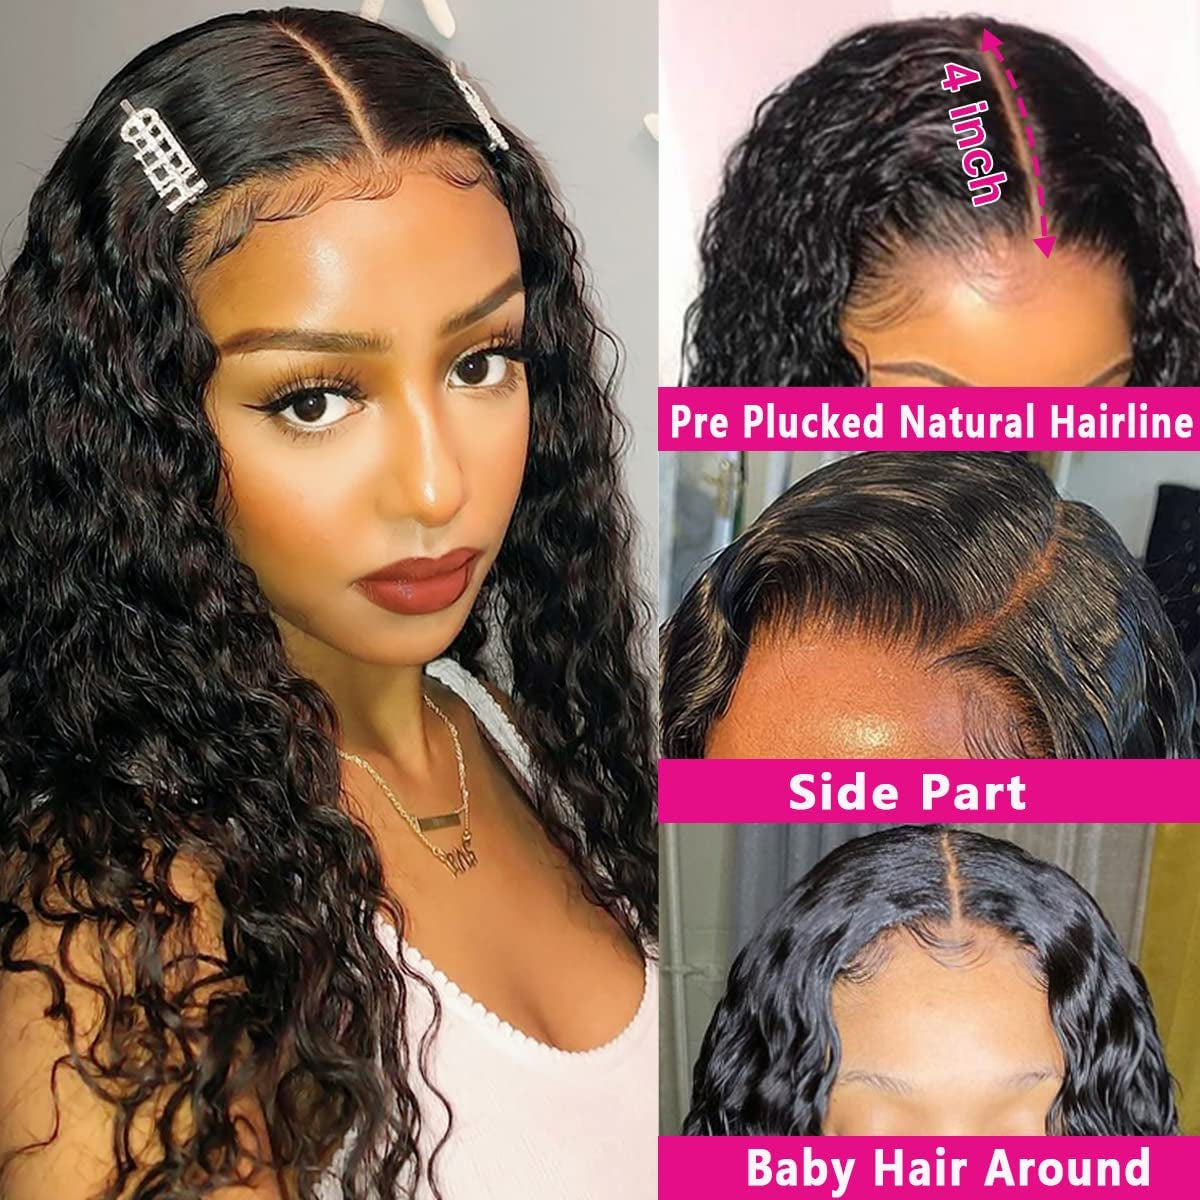 Professional Title: "Premium HD Transparent Lace Front Human Hair Wig - 4X4 Deep Wave Brazilian Virgin Hair, 180% Density, Lace Closure, Natural Color - Ideal for Black Women (18 Inch, Deep Wave)"